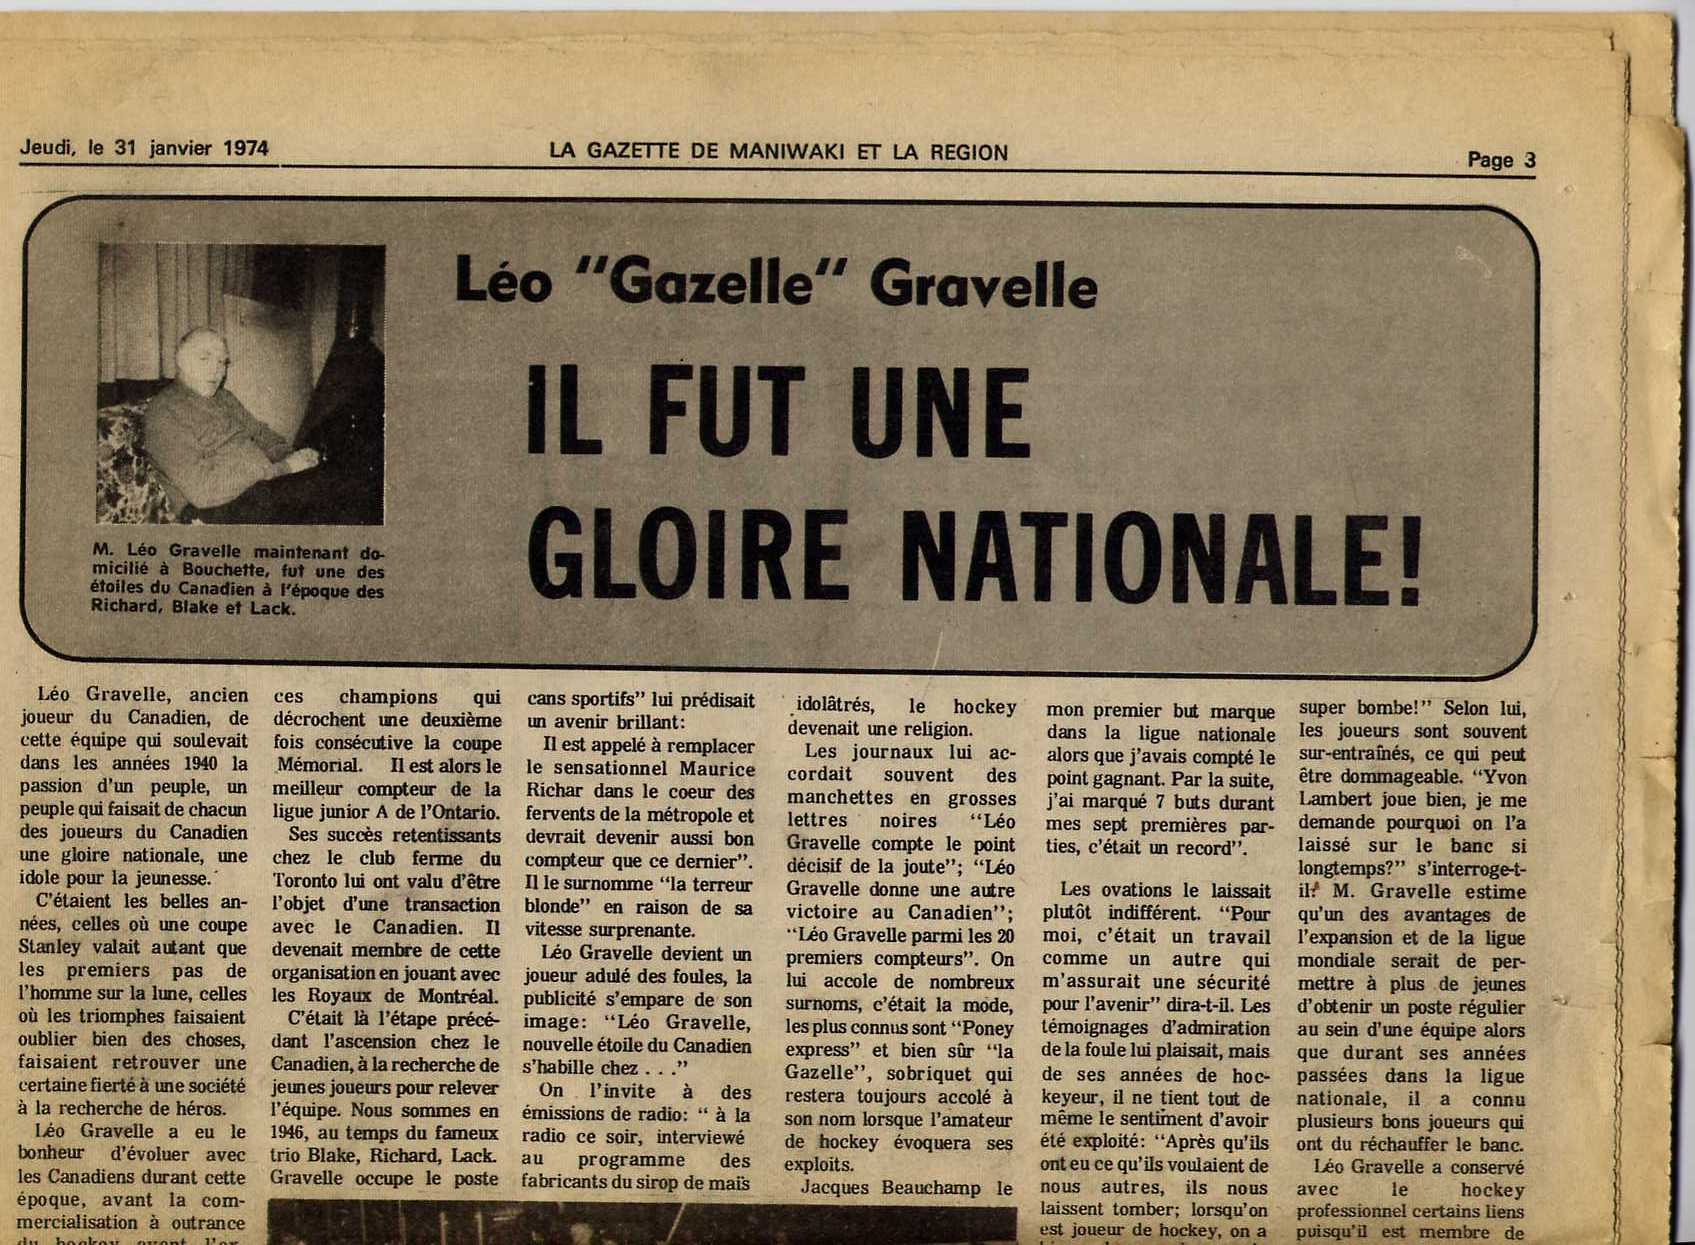 La Gazette de Maniwaki 31 janvier 1974 - pt 1